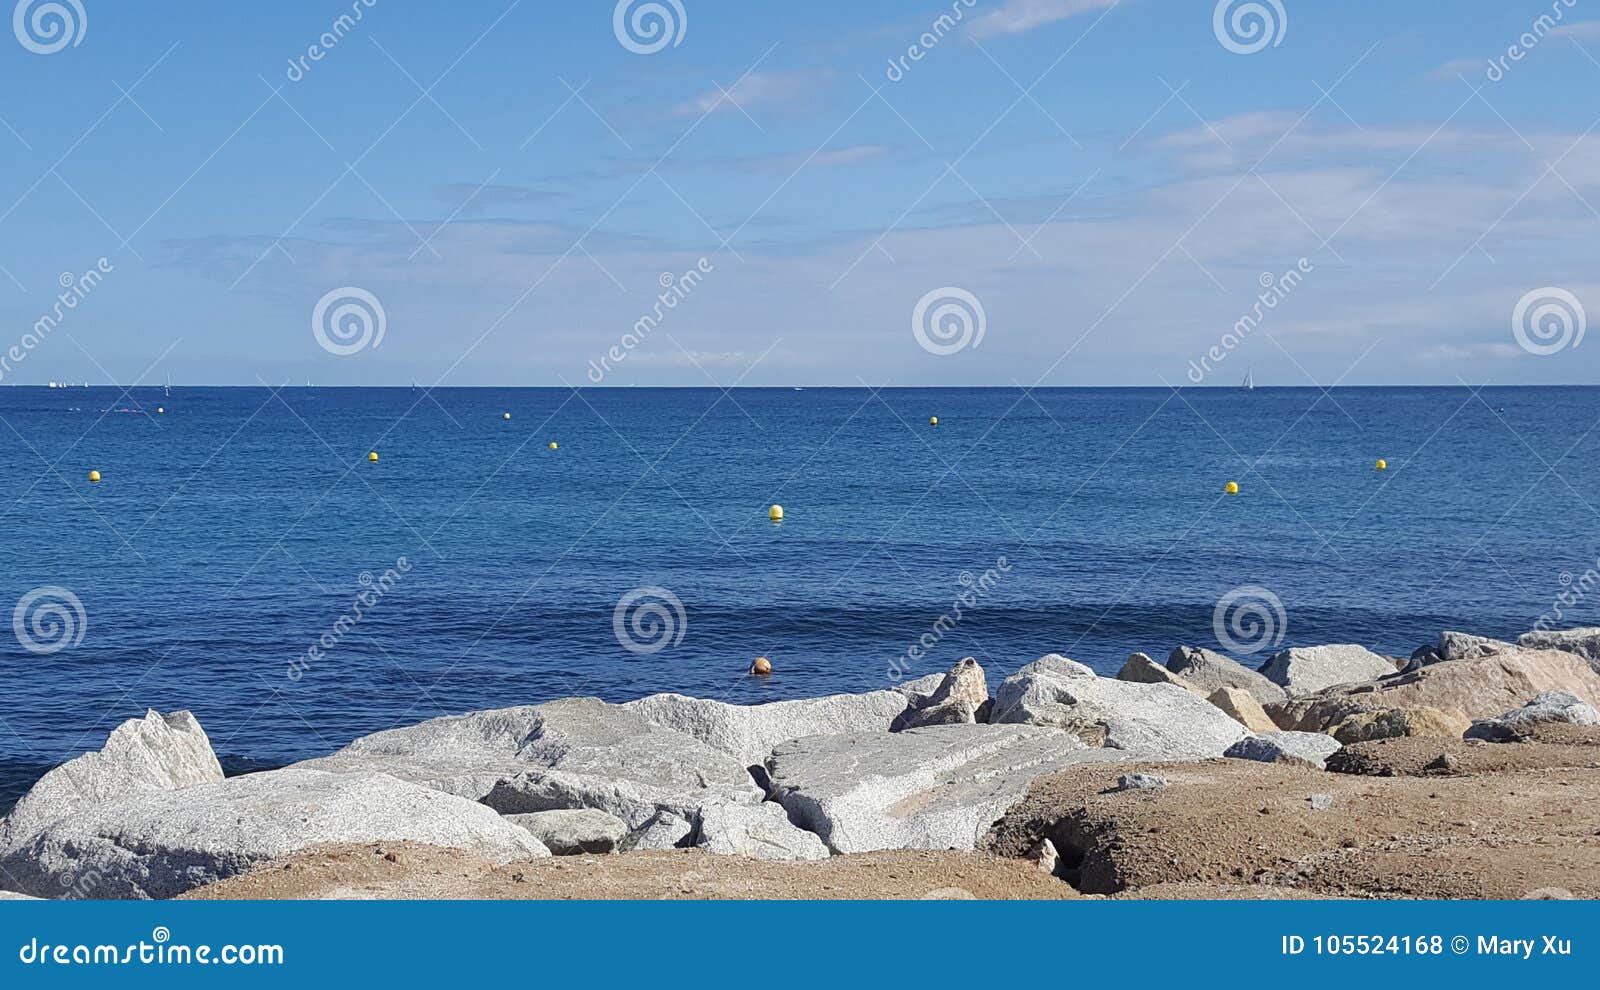 Sea, Sky and Rocks stock photo. Image of barcelona, spain - 105524168